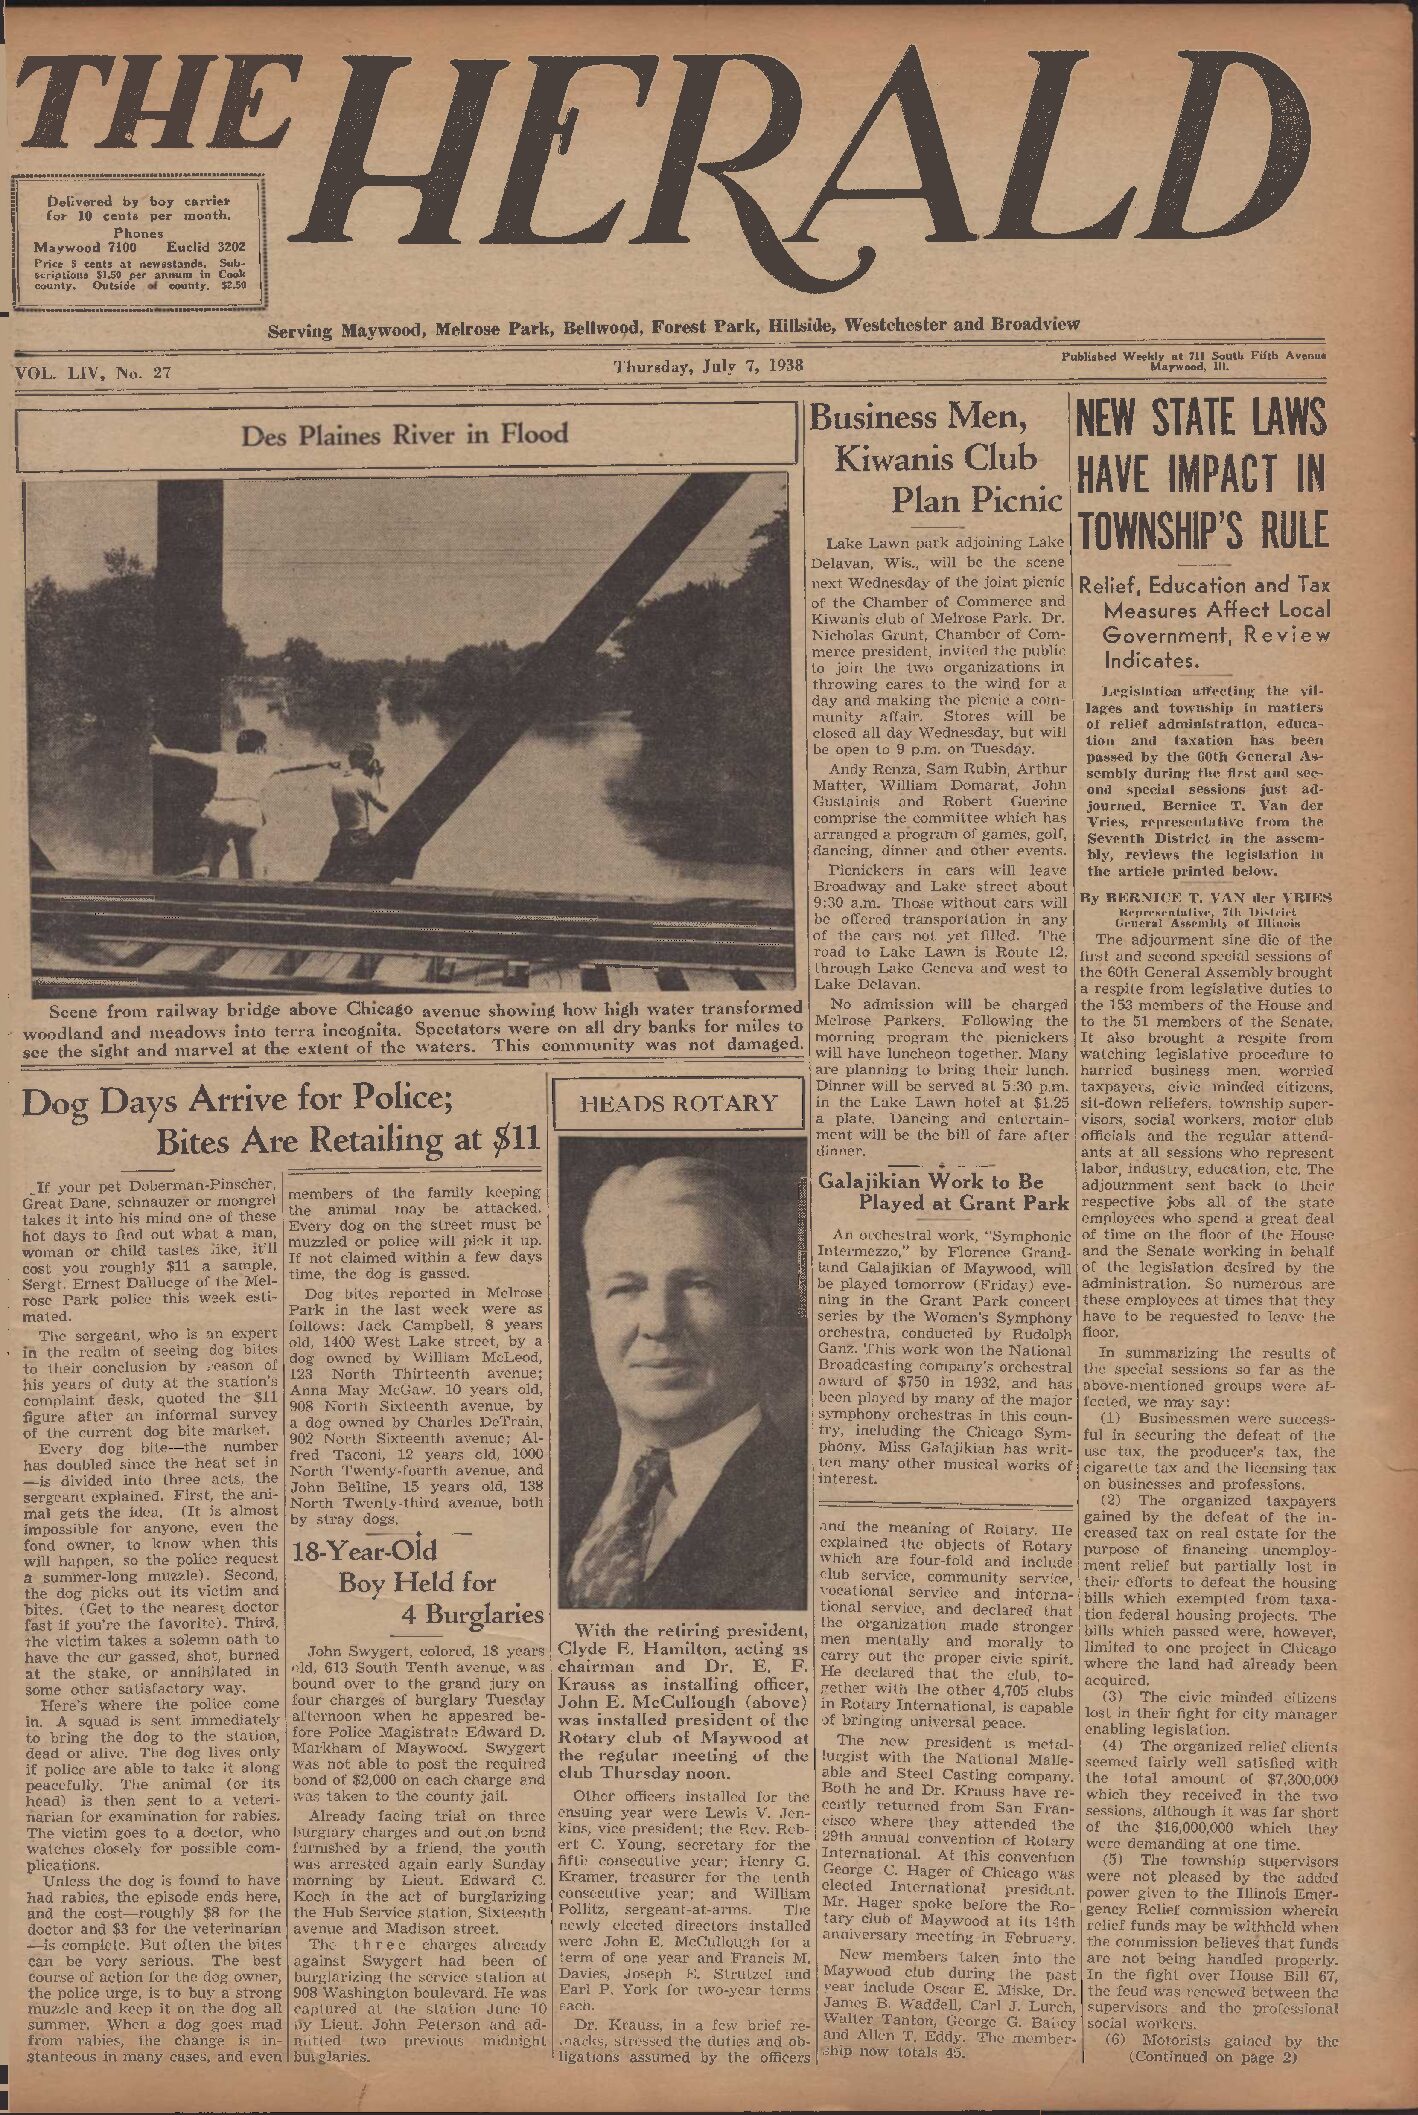 The Herald – 19380707